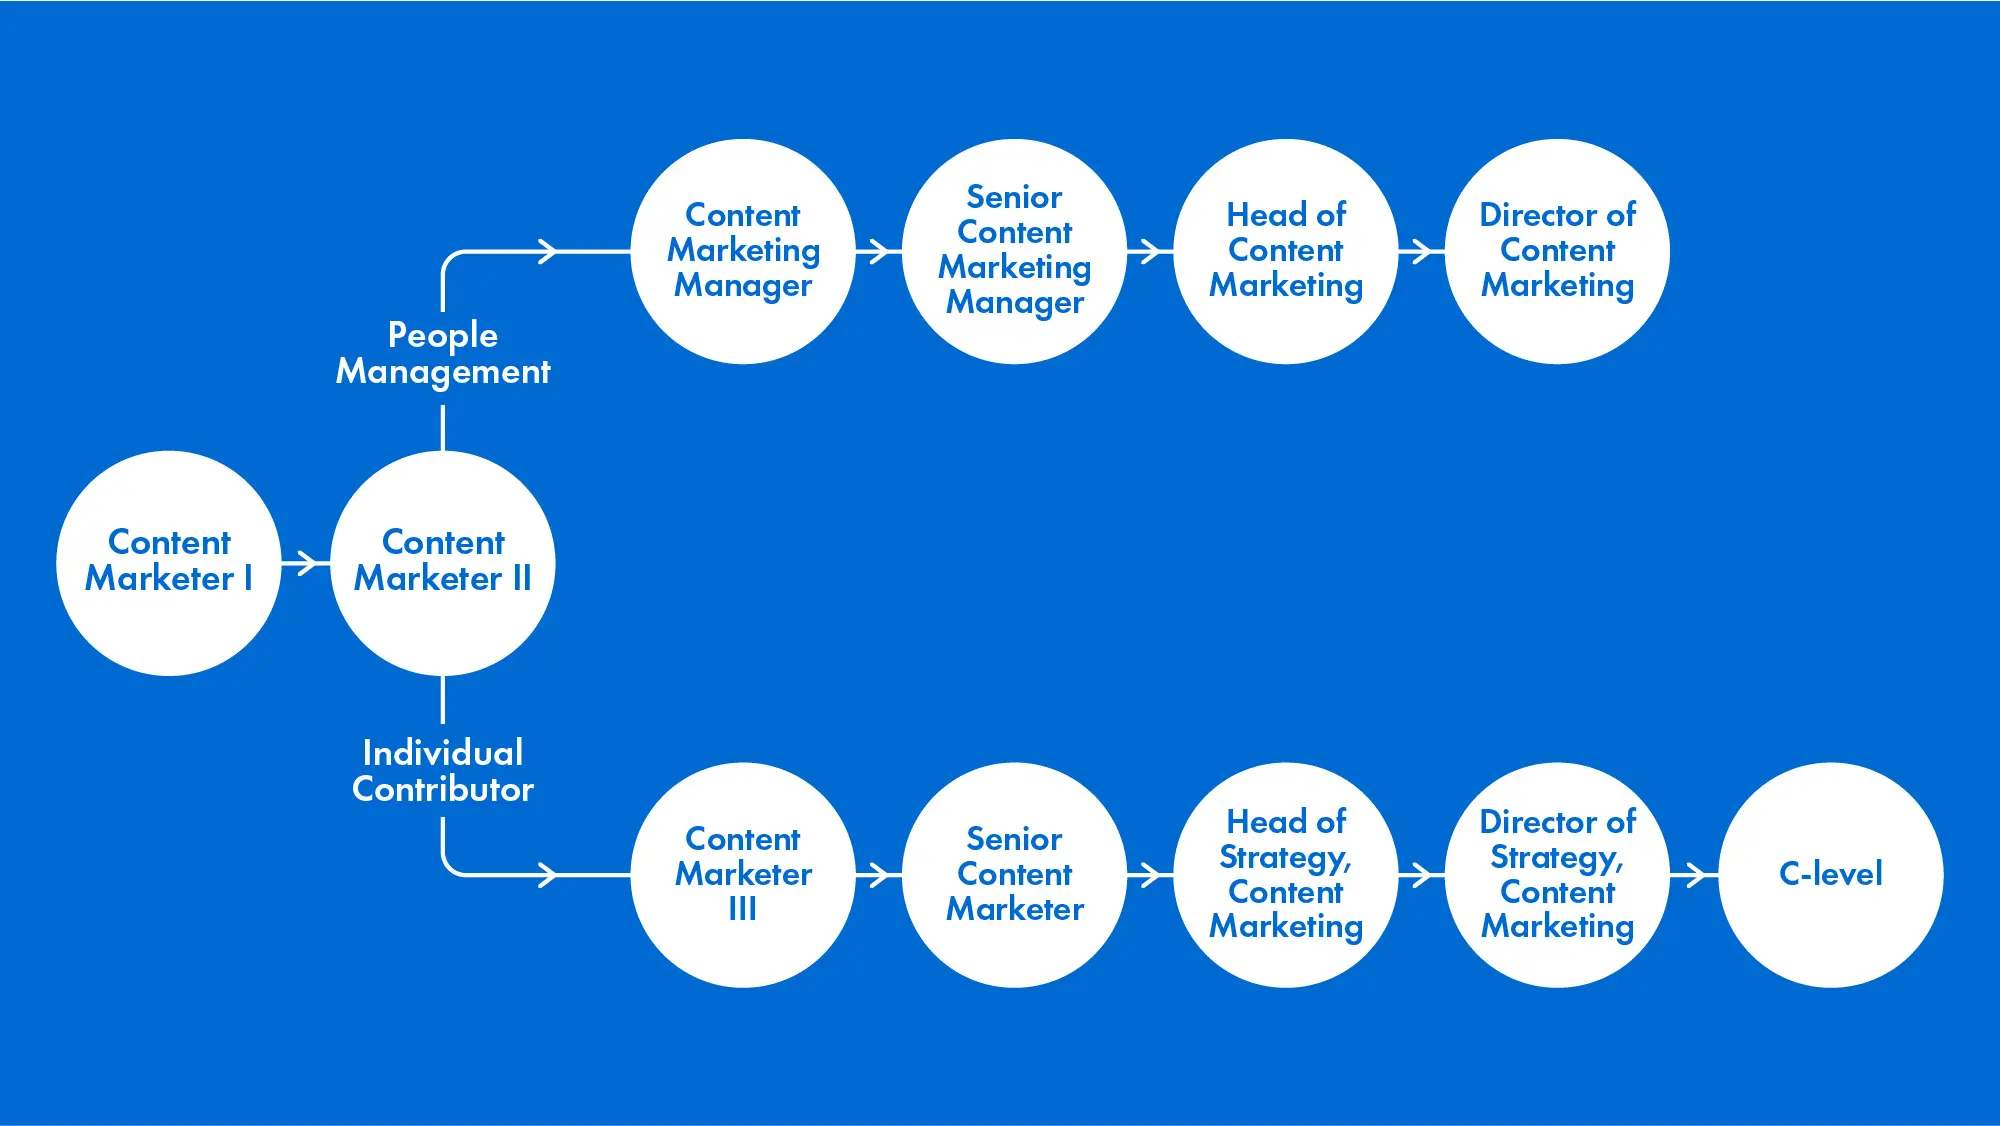 Titles for career progression framework CharlieHR